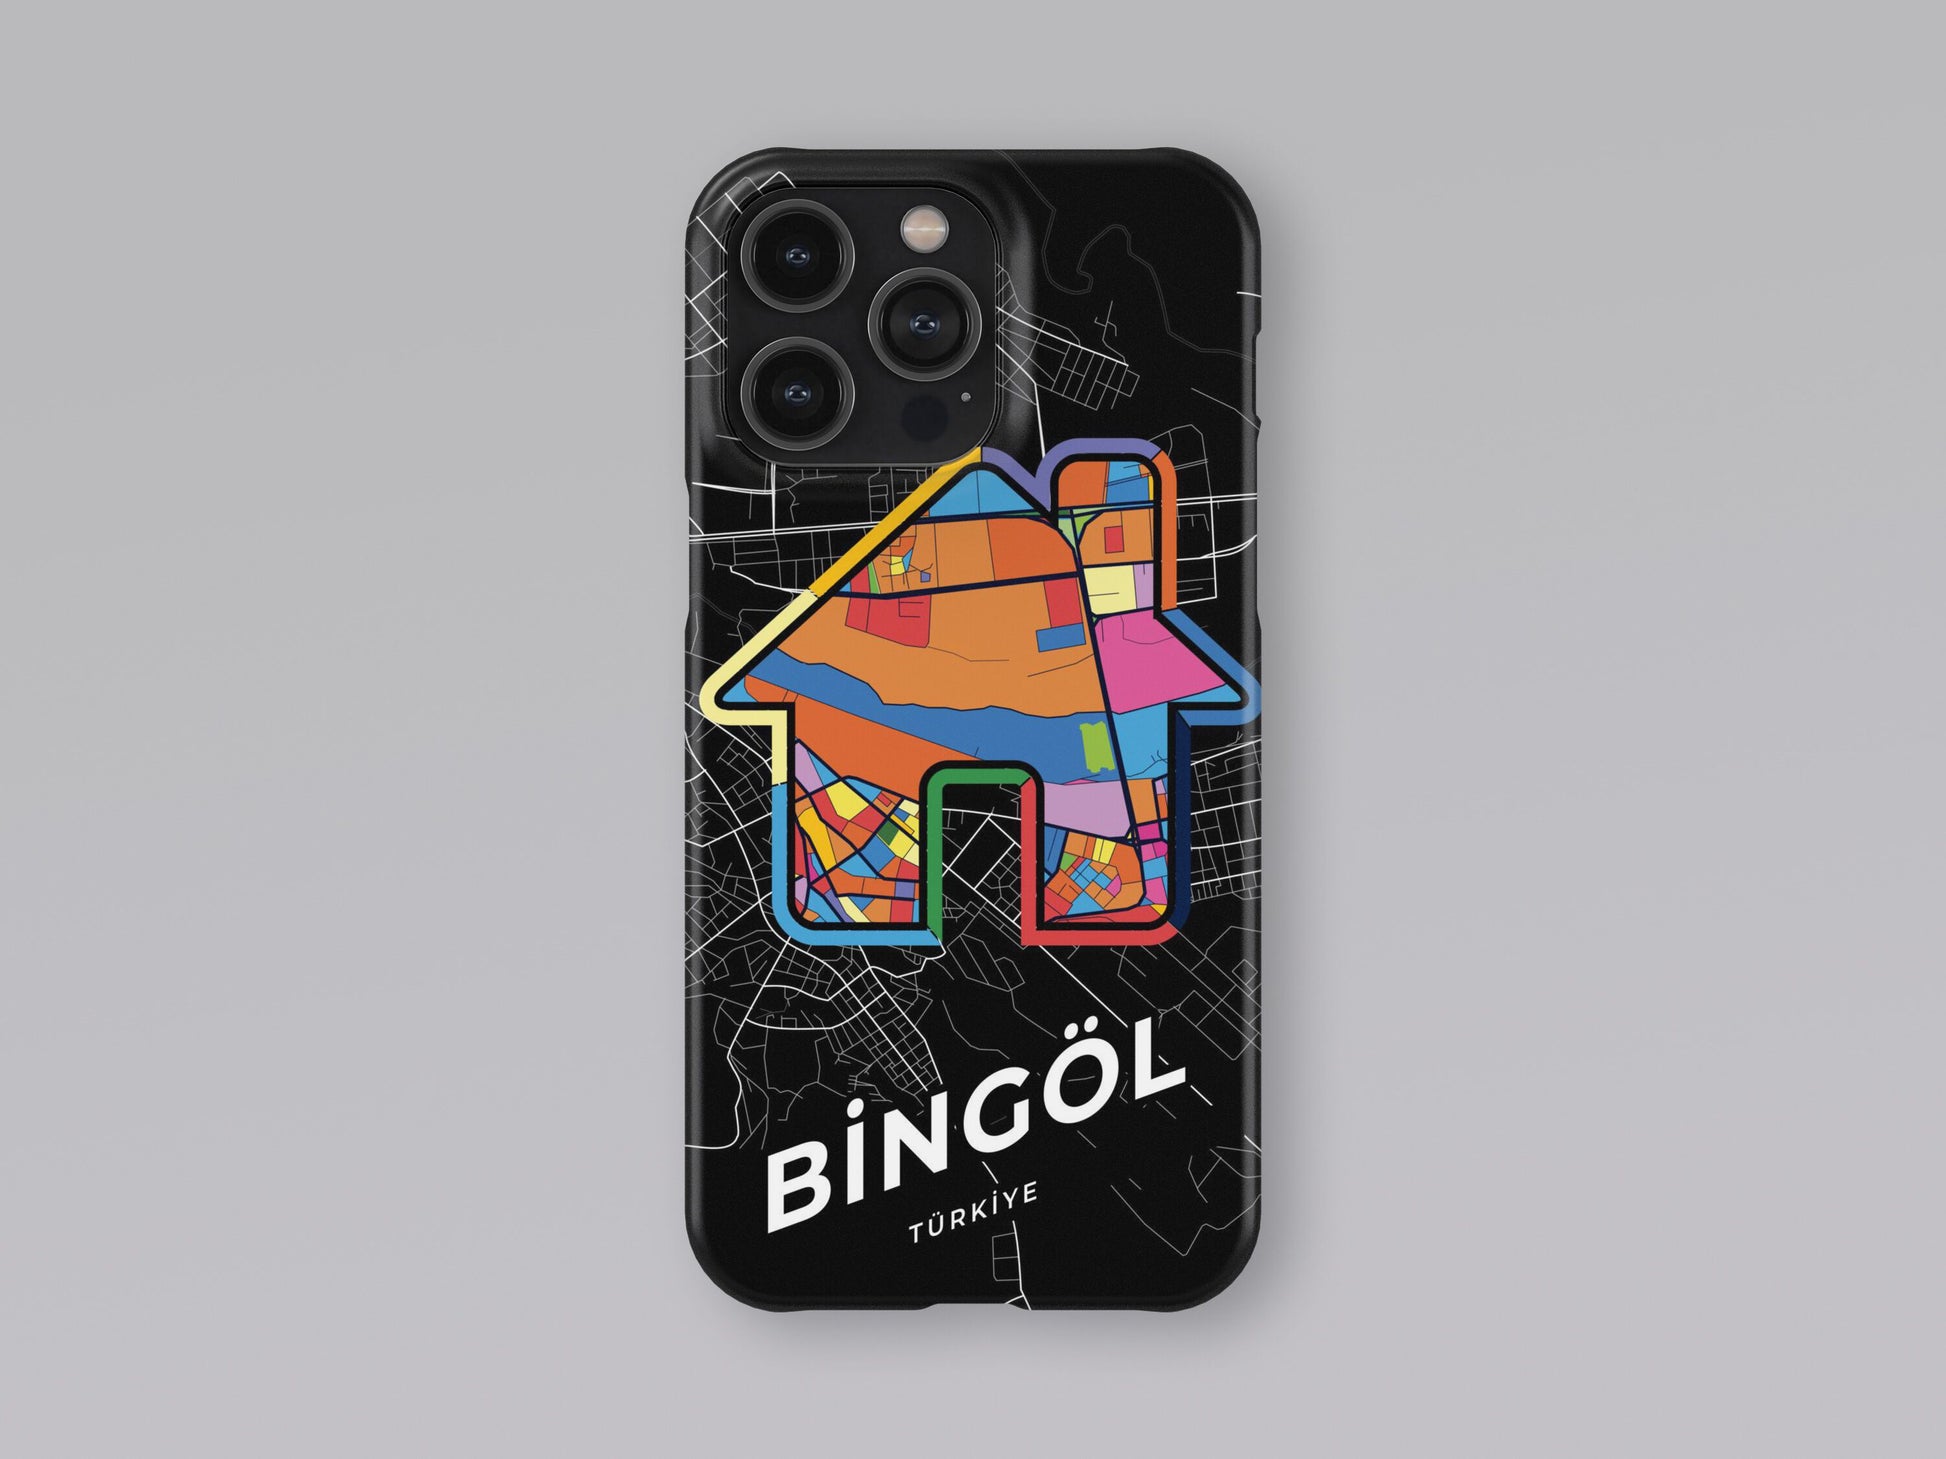 Bingöl Turkey slim phone case with colorful icon. Birthday, wedding or housewarming gift. Couple match cases. 3